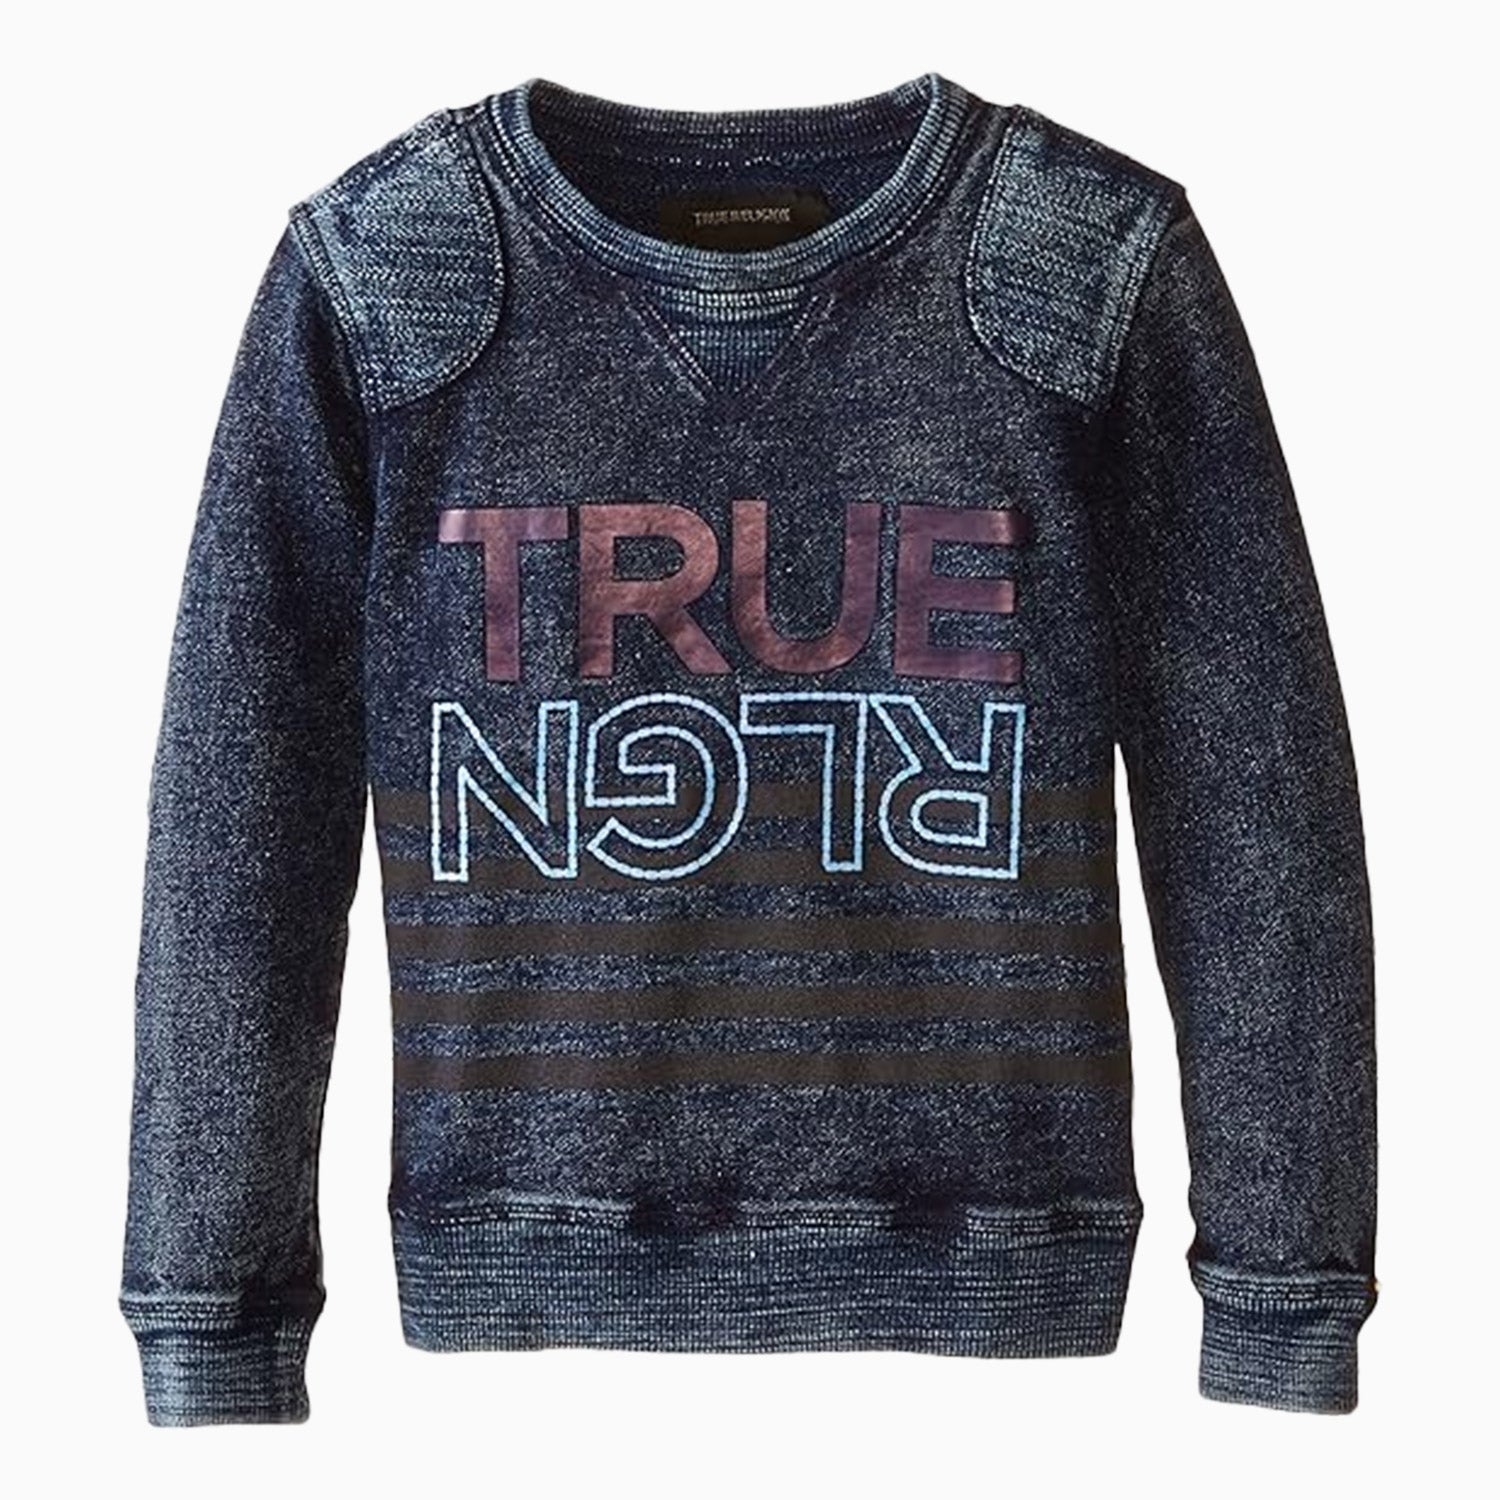 true-religion-kids-indigo-fleece-sweatshirt-tr735lk14